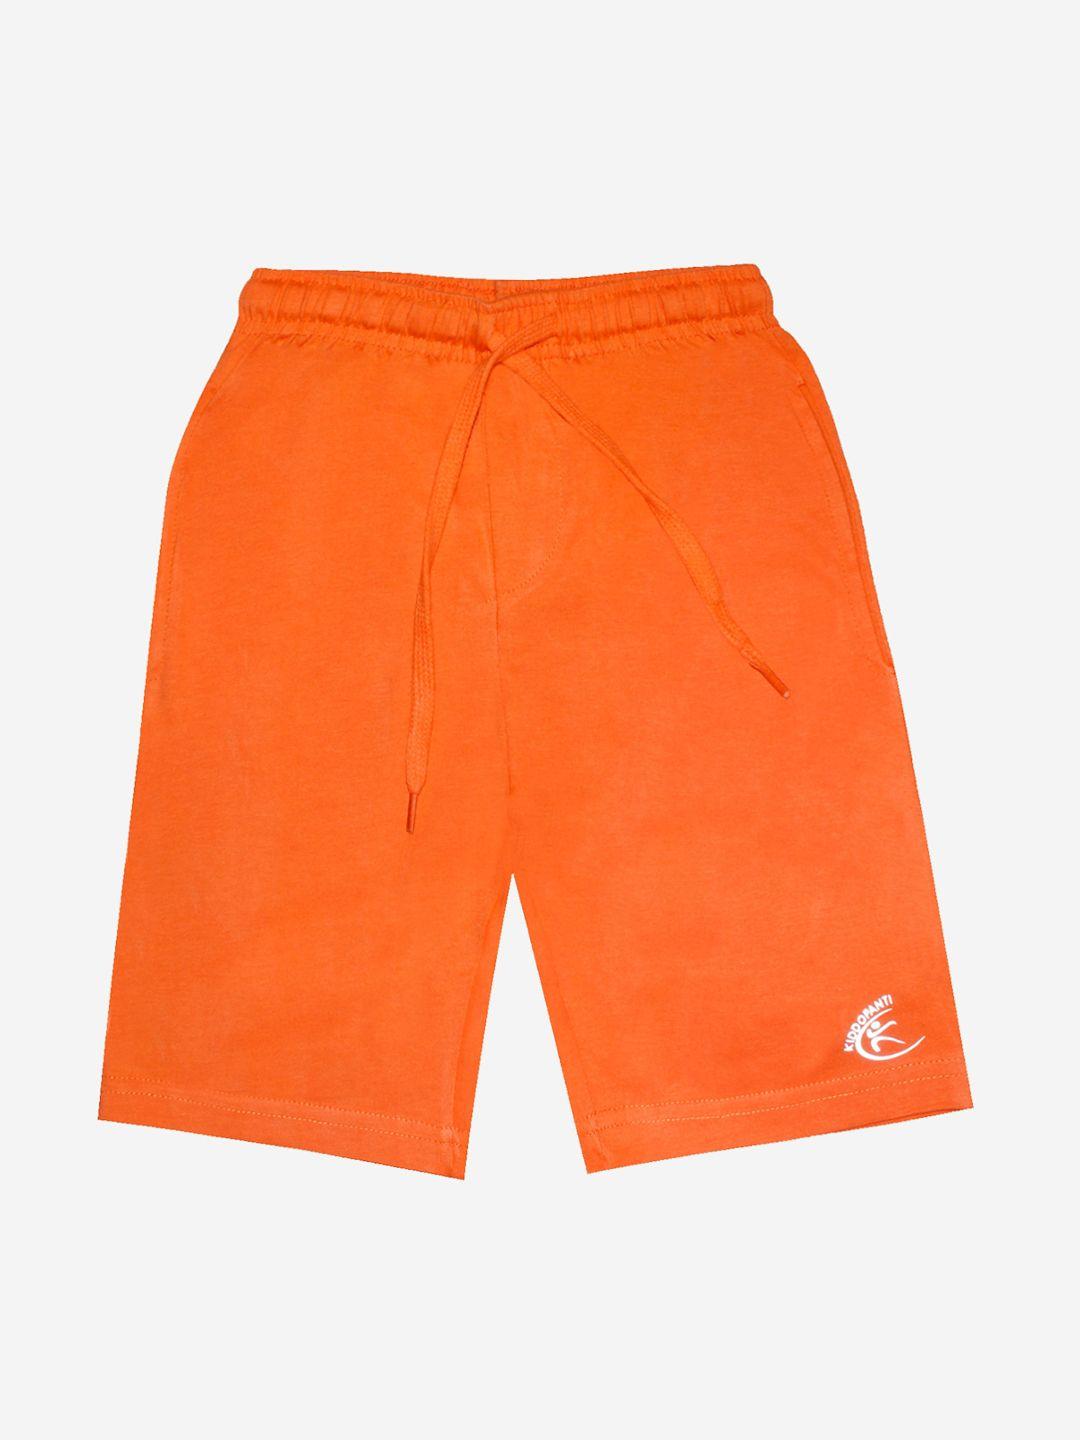 kiddopanti boys orange sports shorts